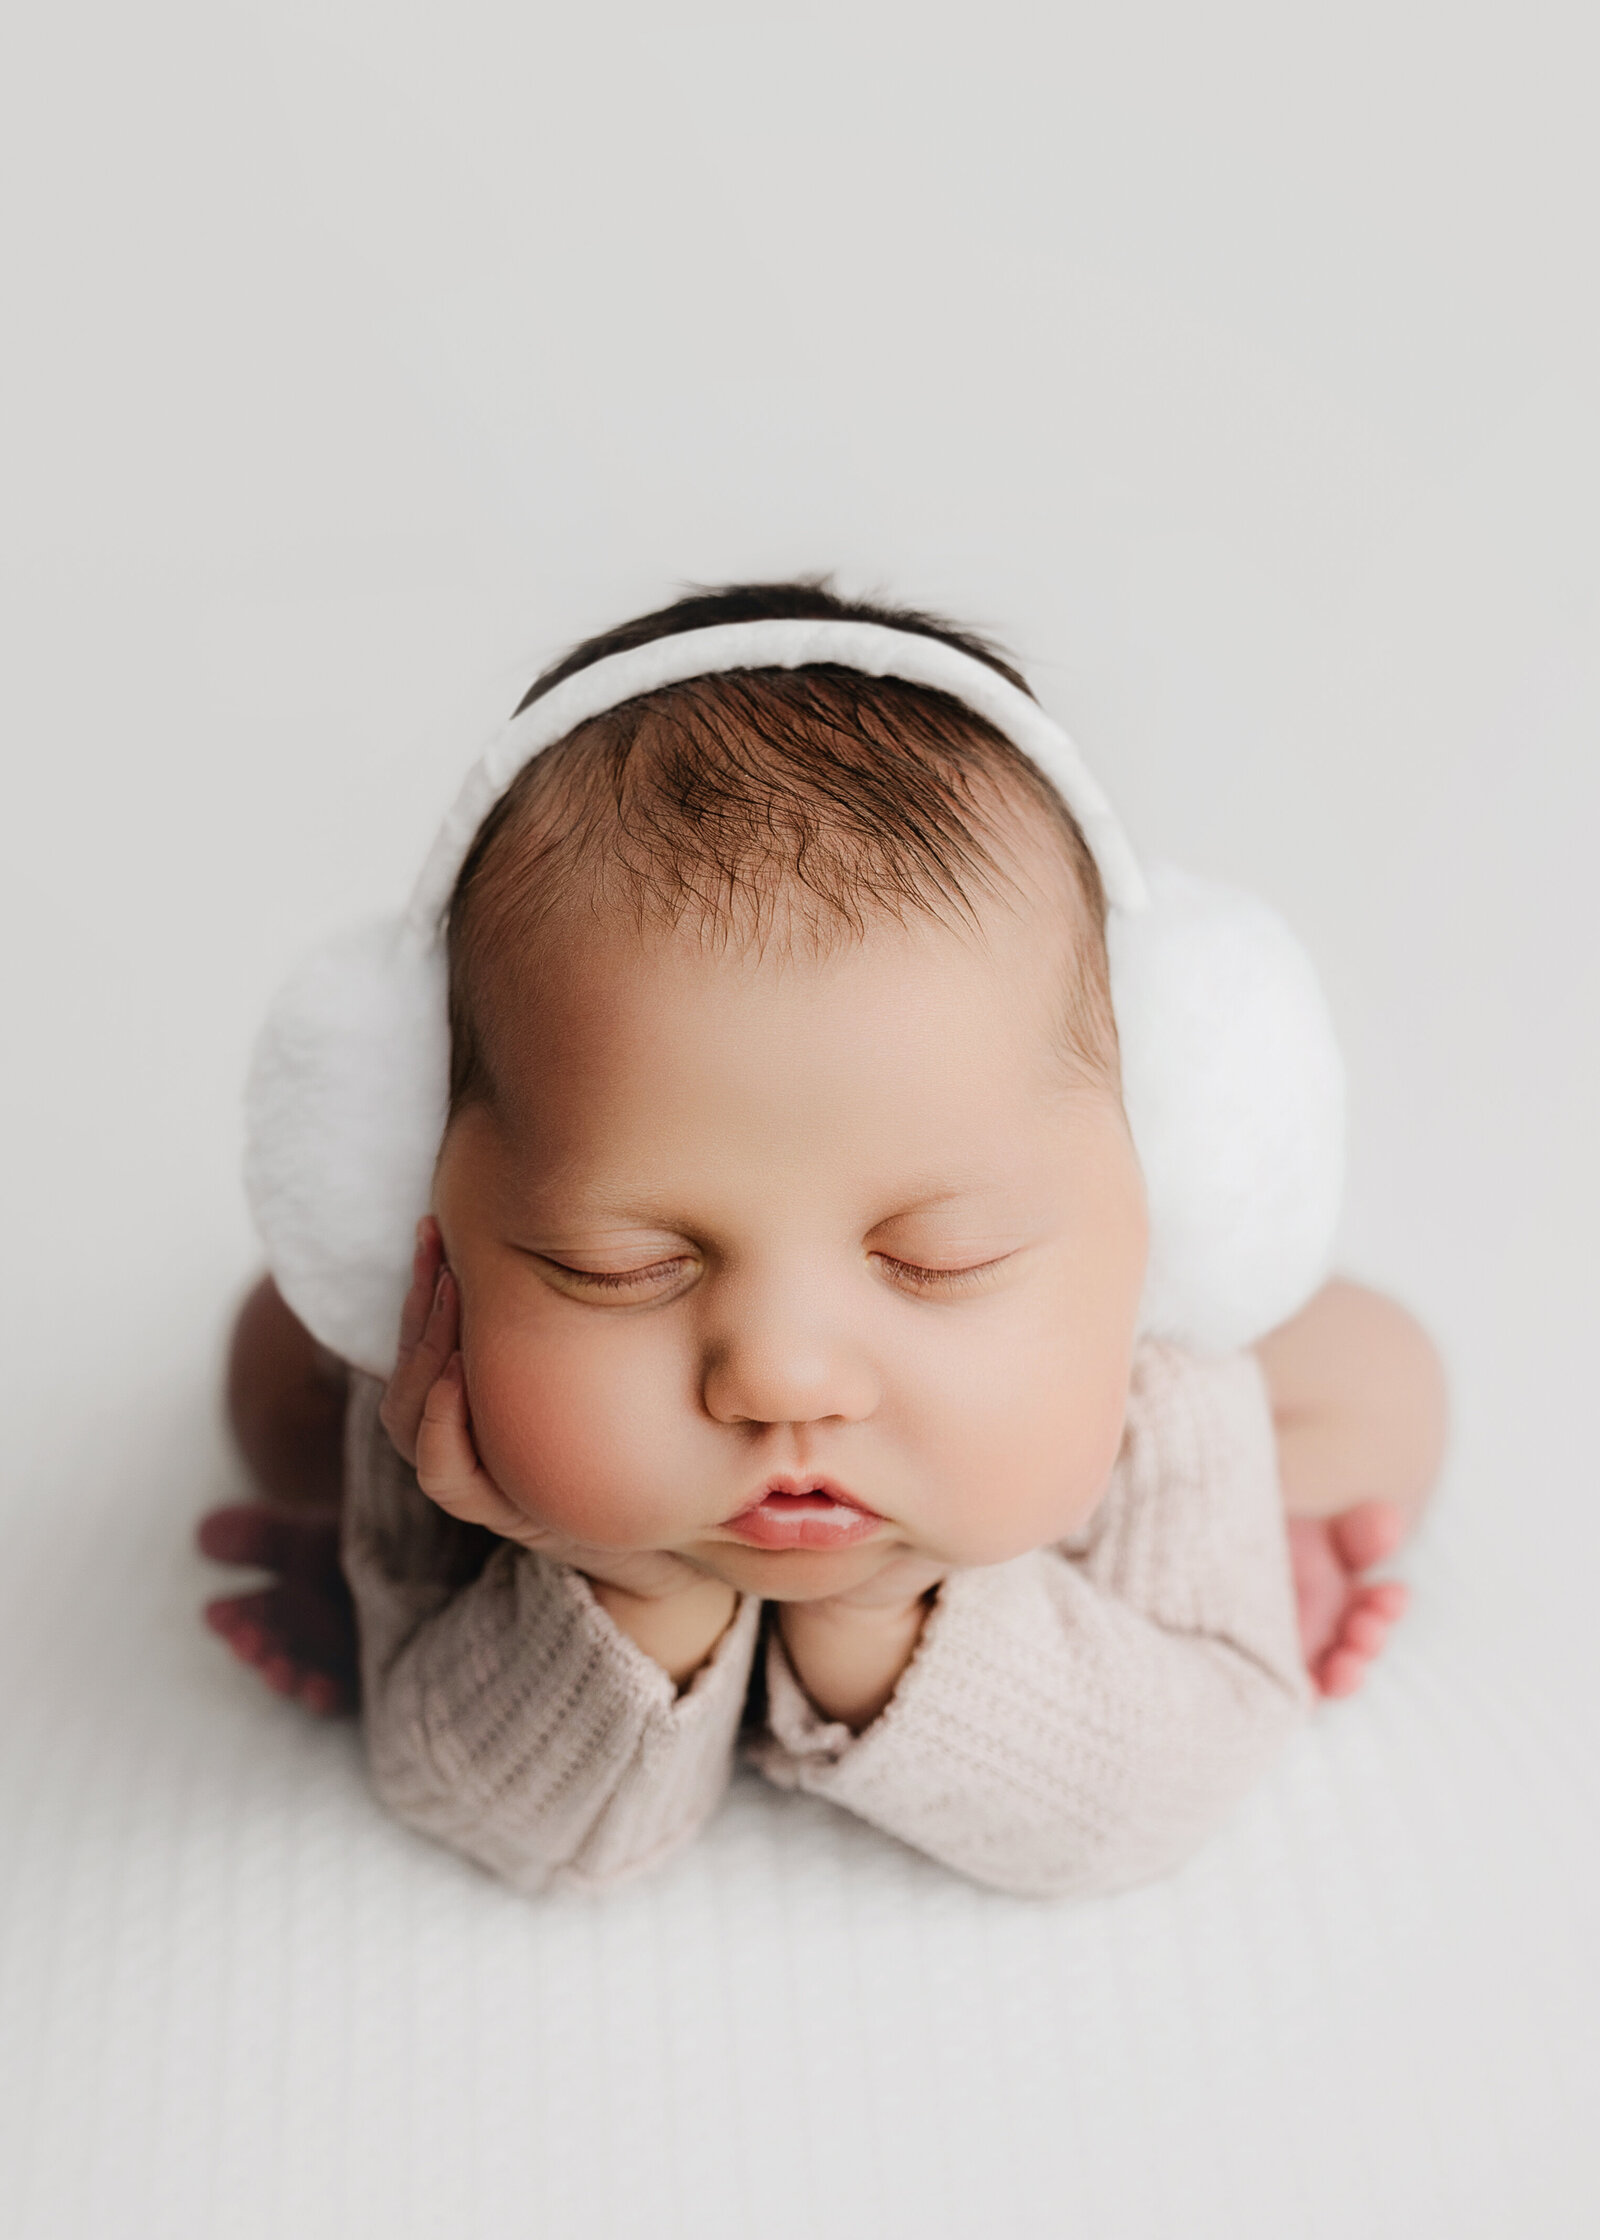 Newborn baby girl wearing earmuffs in oswego, new york portrait studio